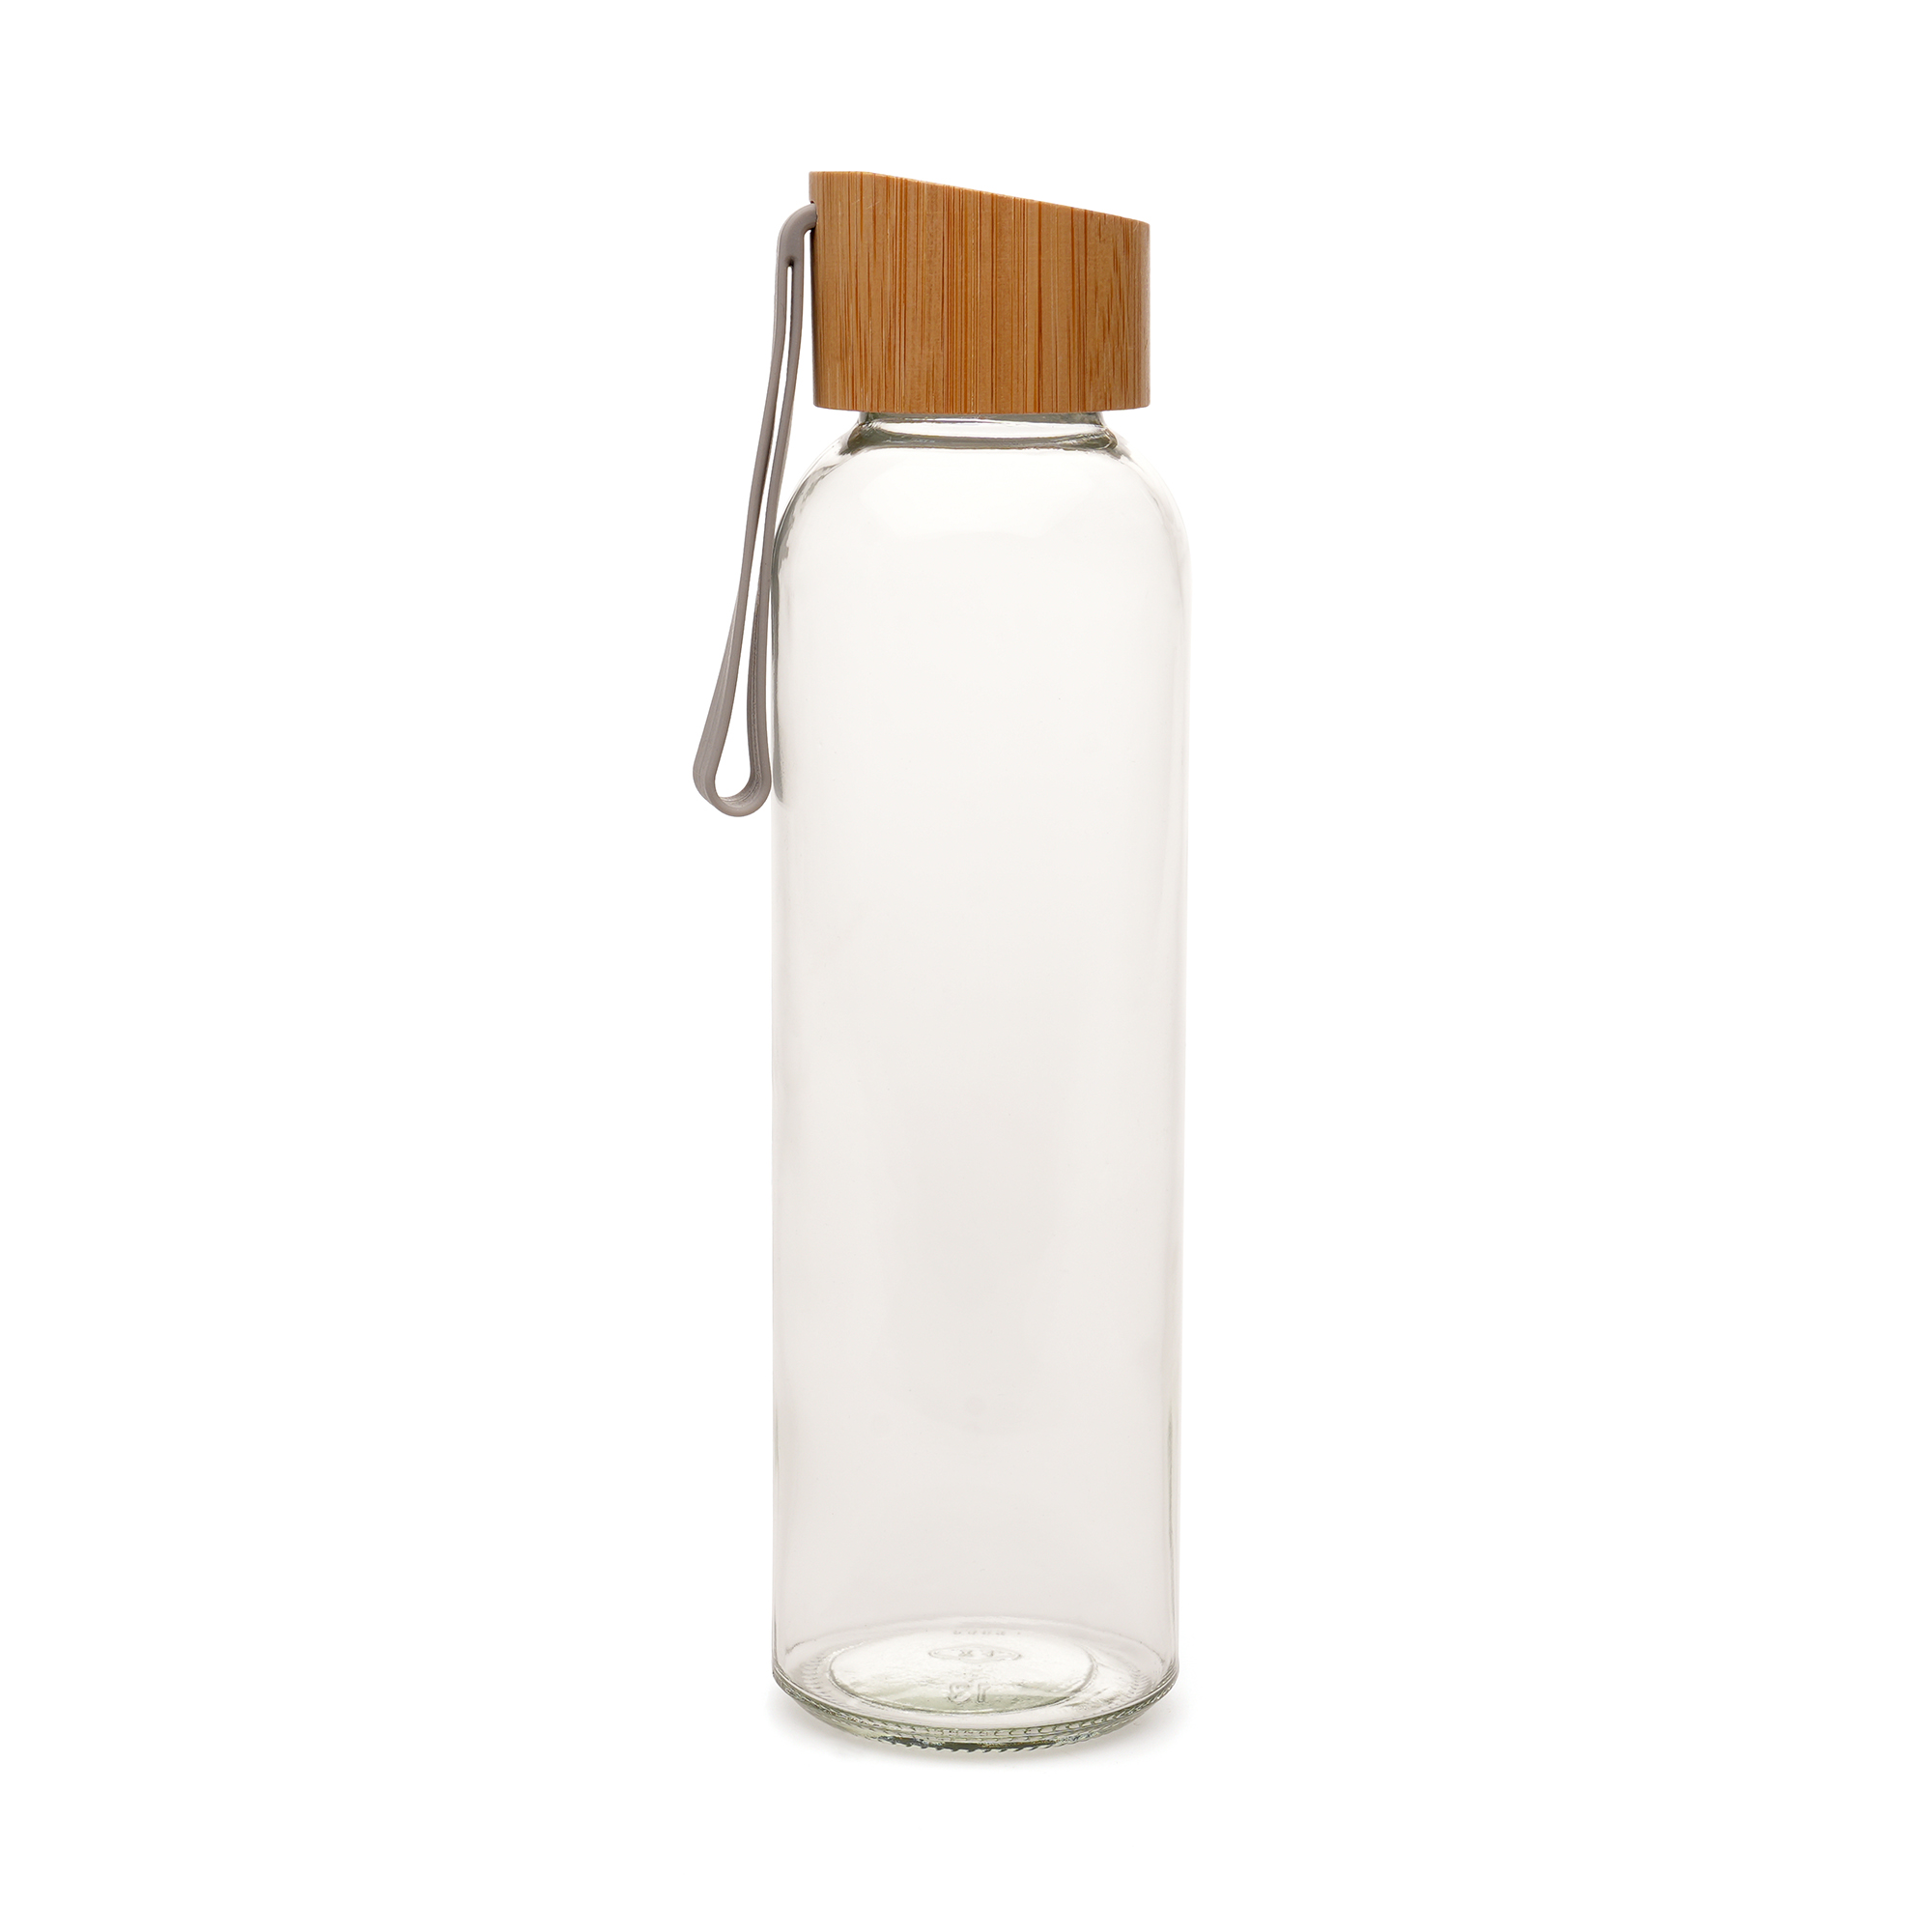 MG7272 1 - 450ml Glass Bamboo Bottle